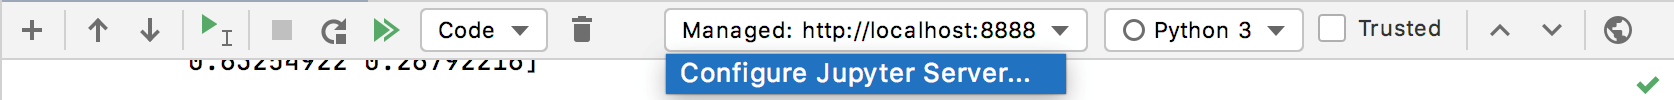 Configure a Jupyter server